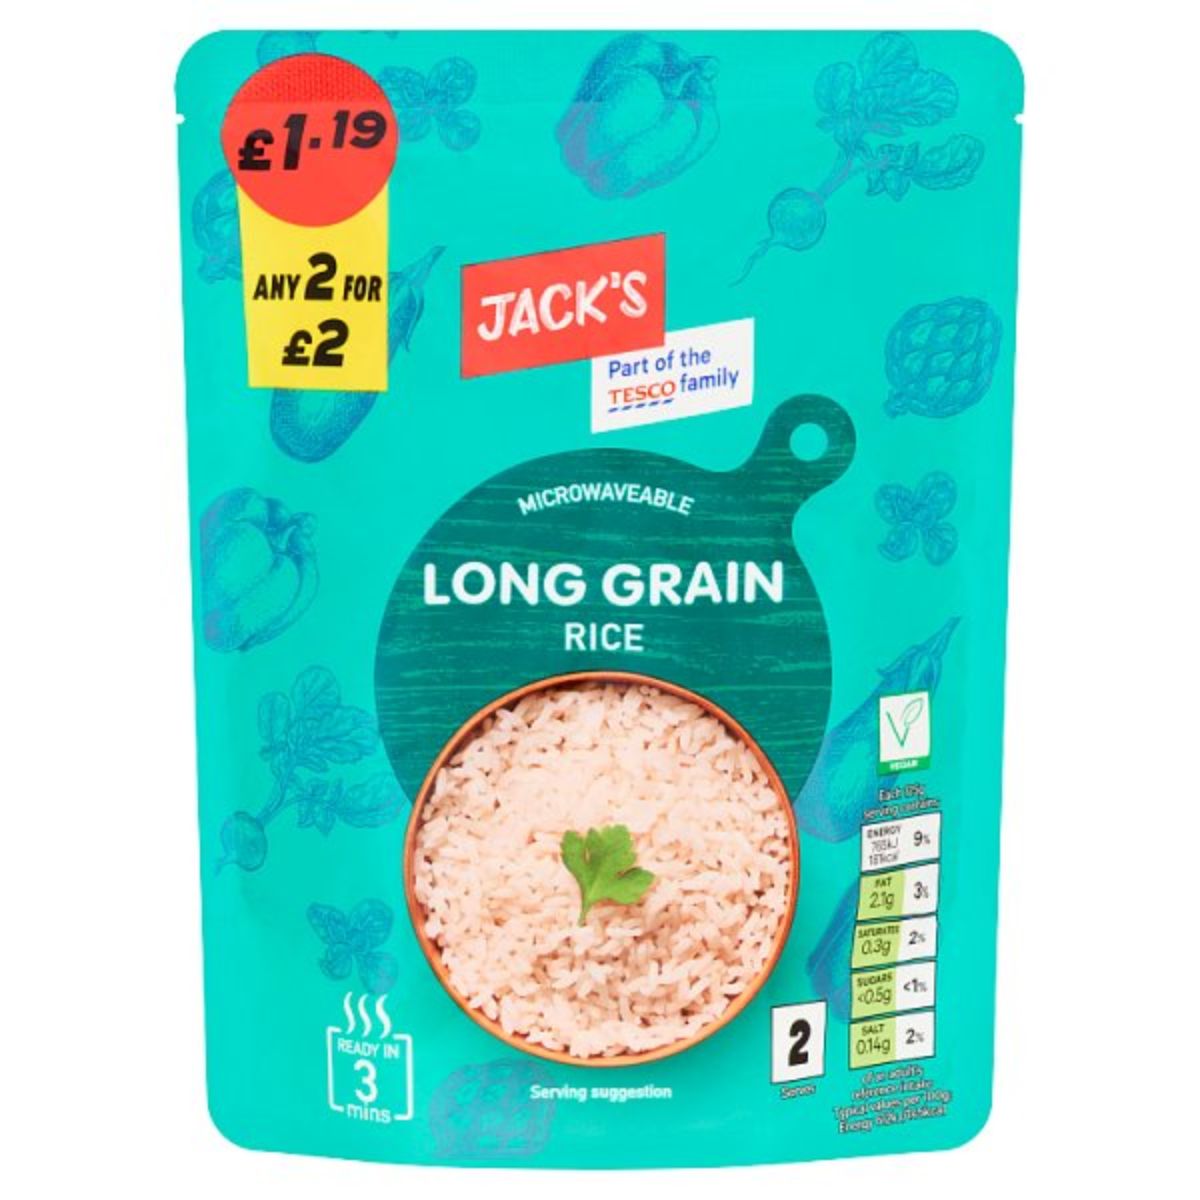 Jacks - Microwaveable Long Grain Rice - 250g in a pouch.